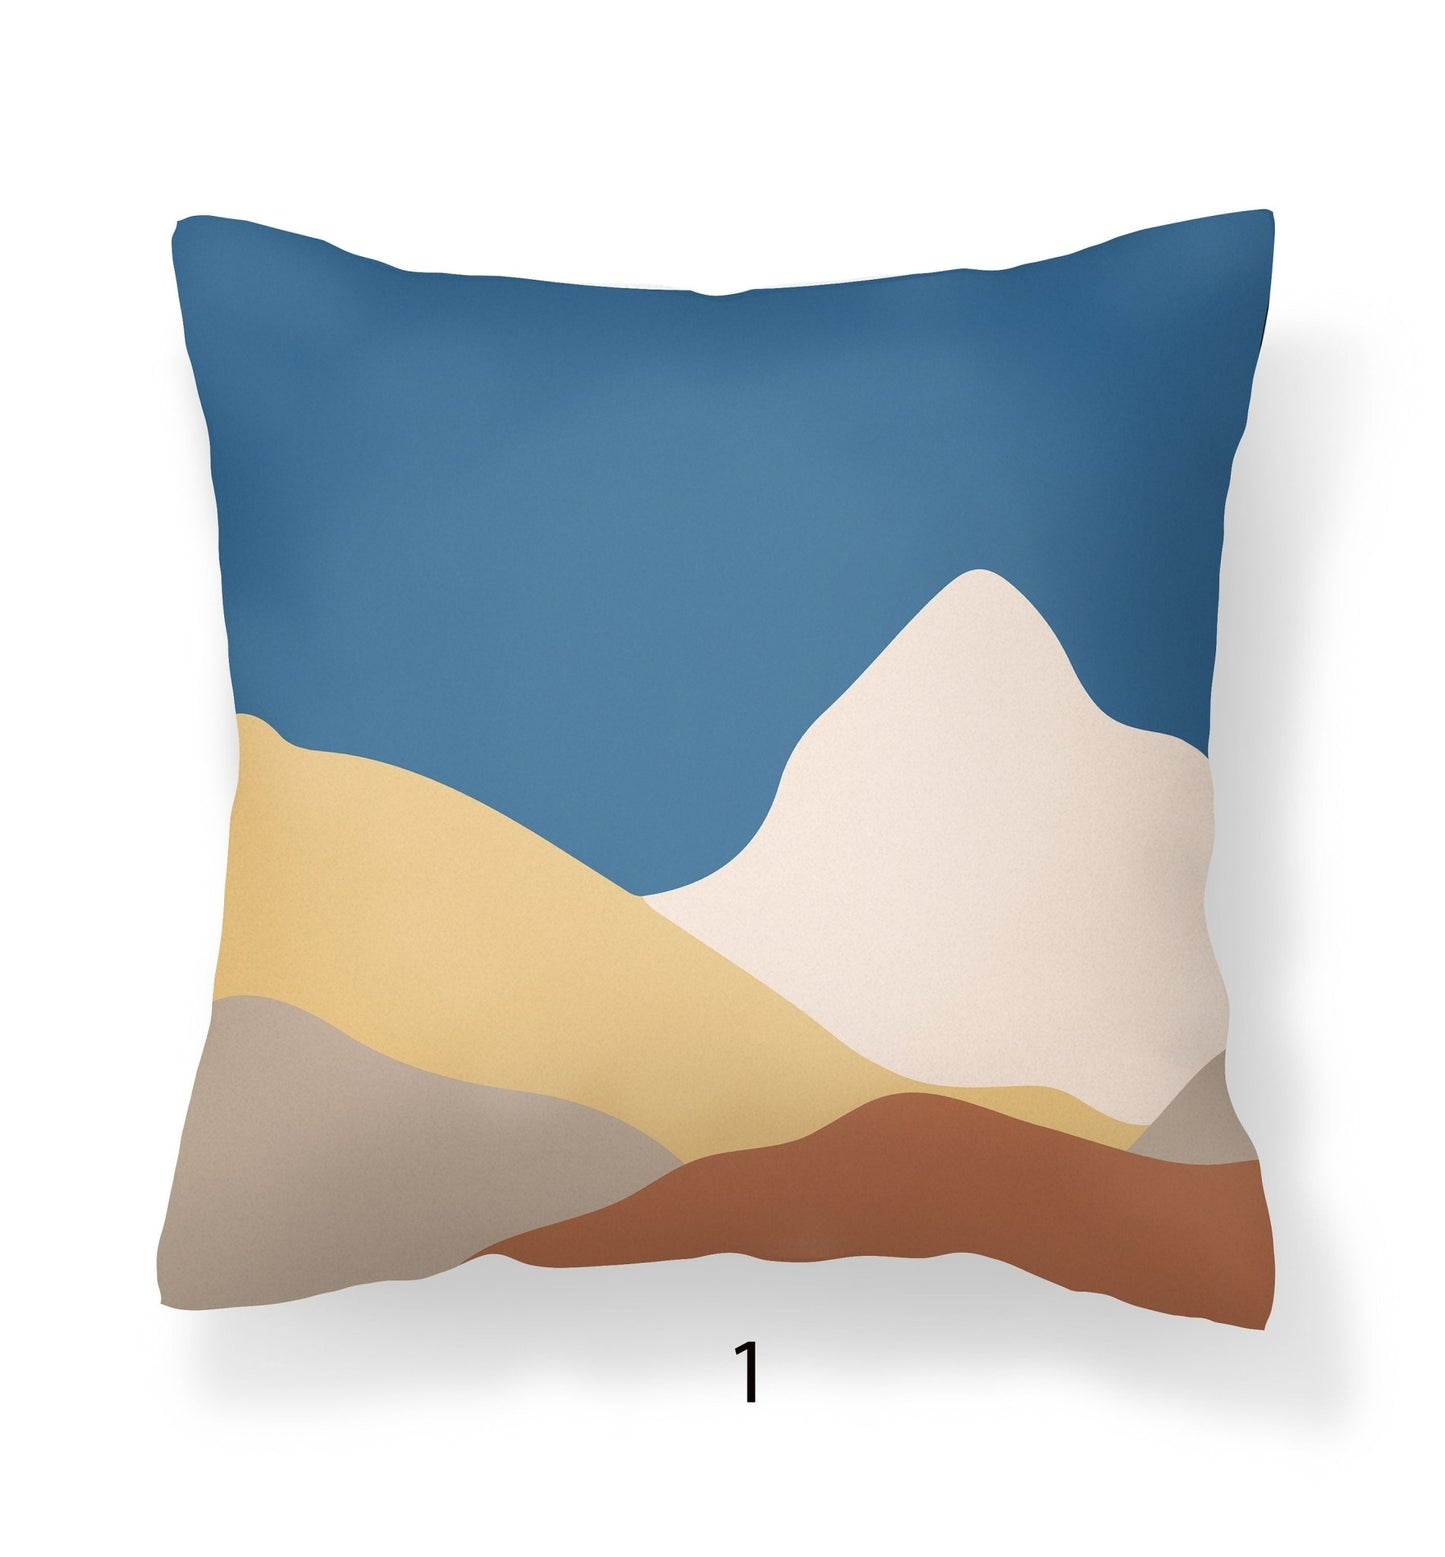 Desert Throw Pillow Covers - Mix and Match